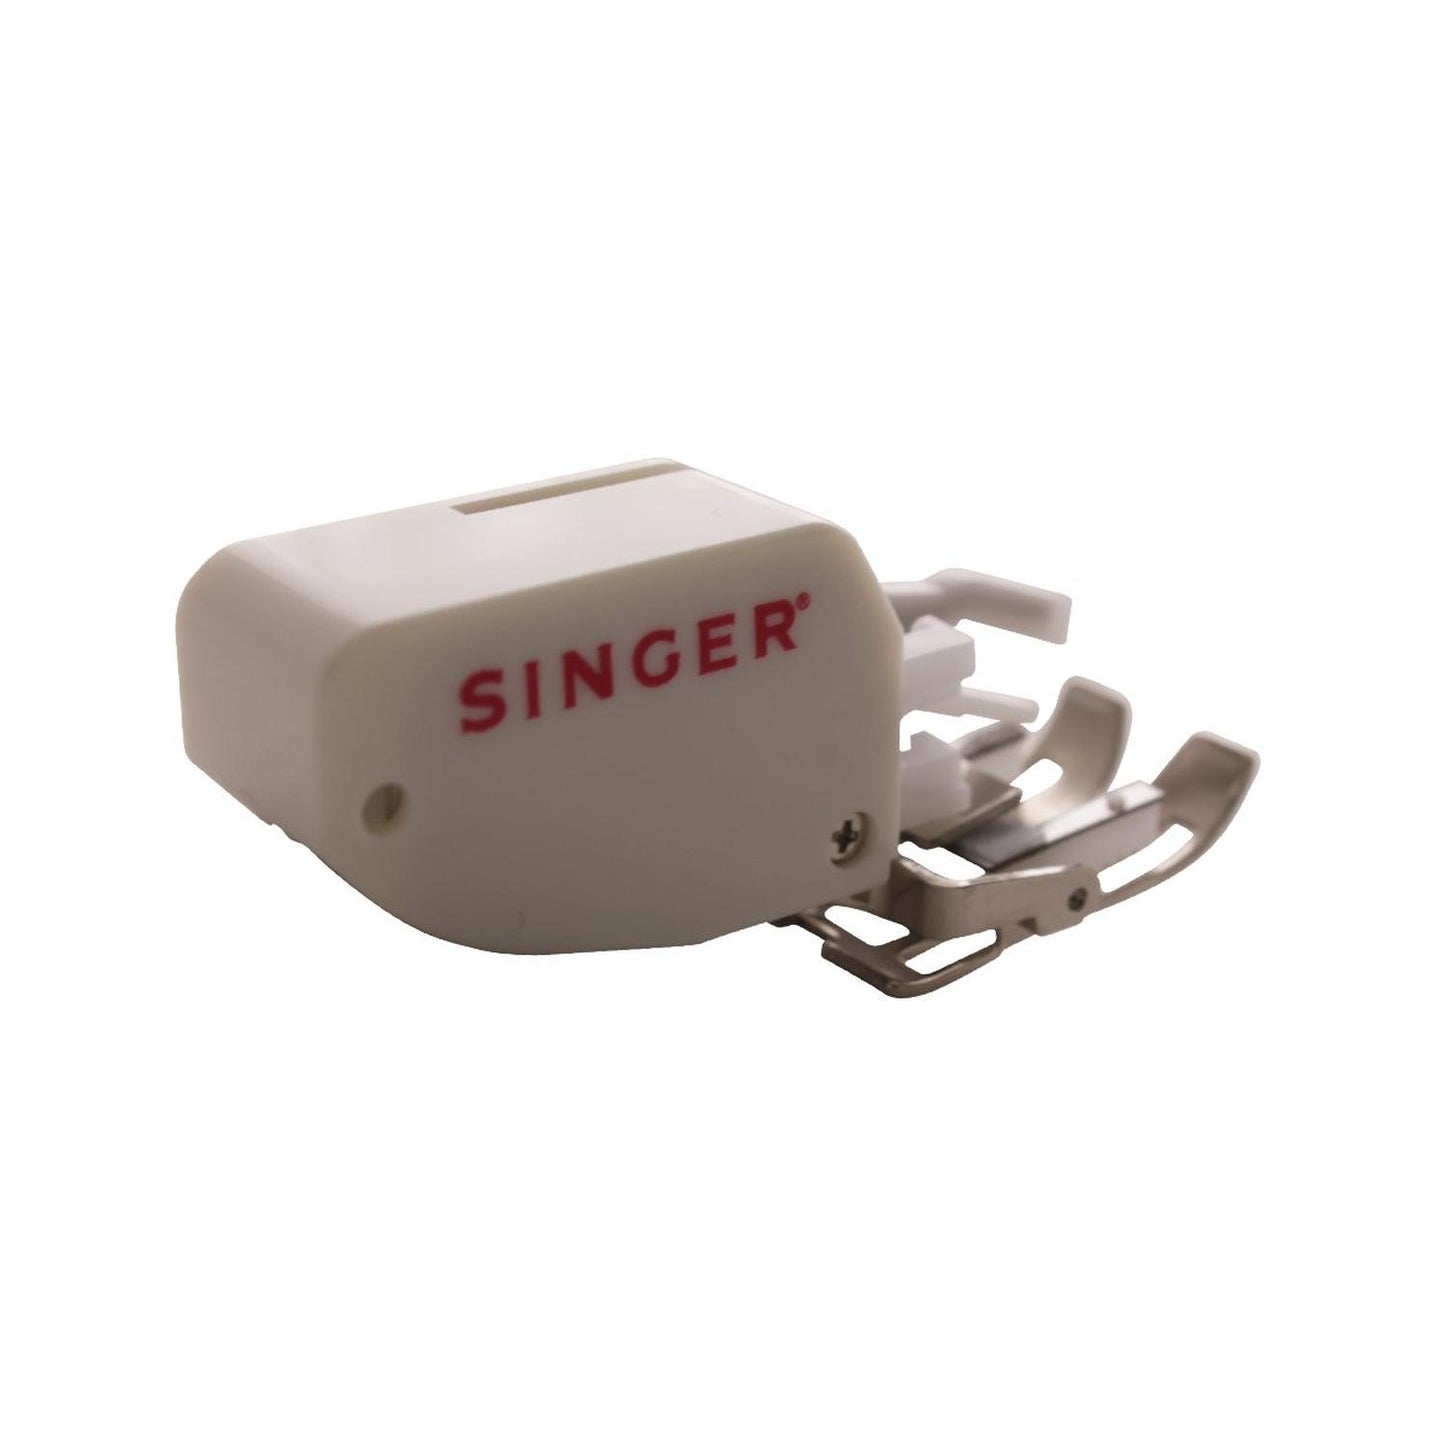 Prensatelas Singer de avance simultáneo, accesorio máquina de coser 250027106